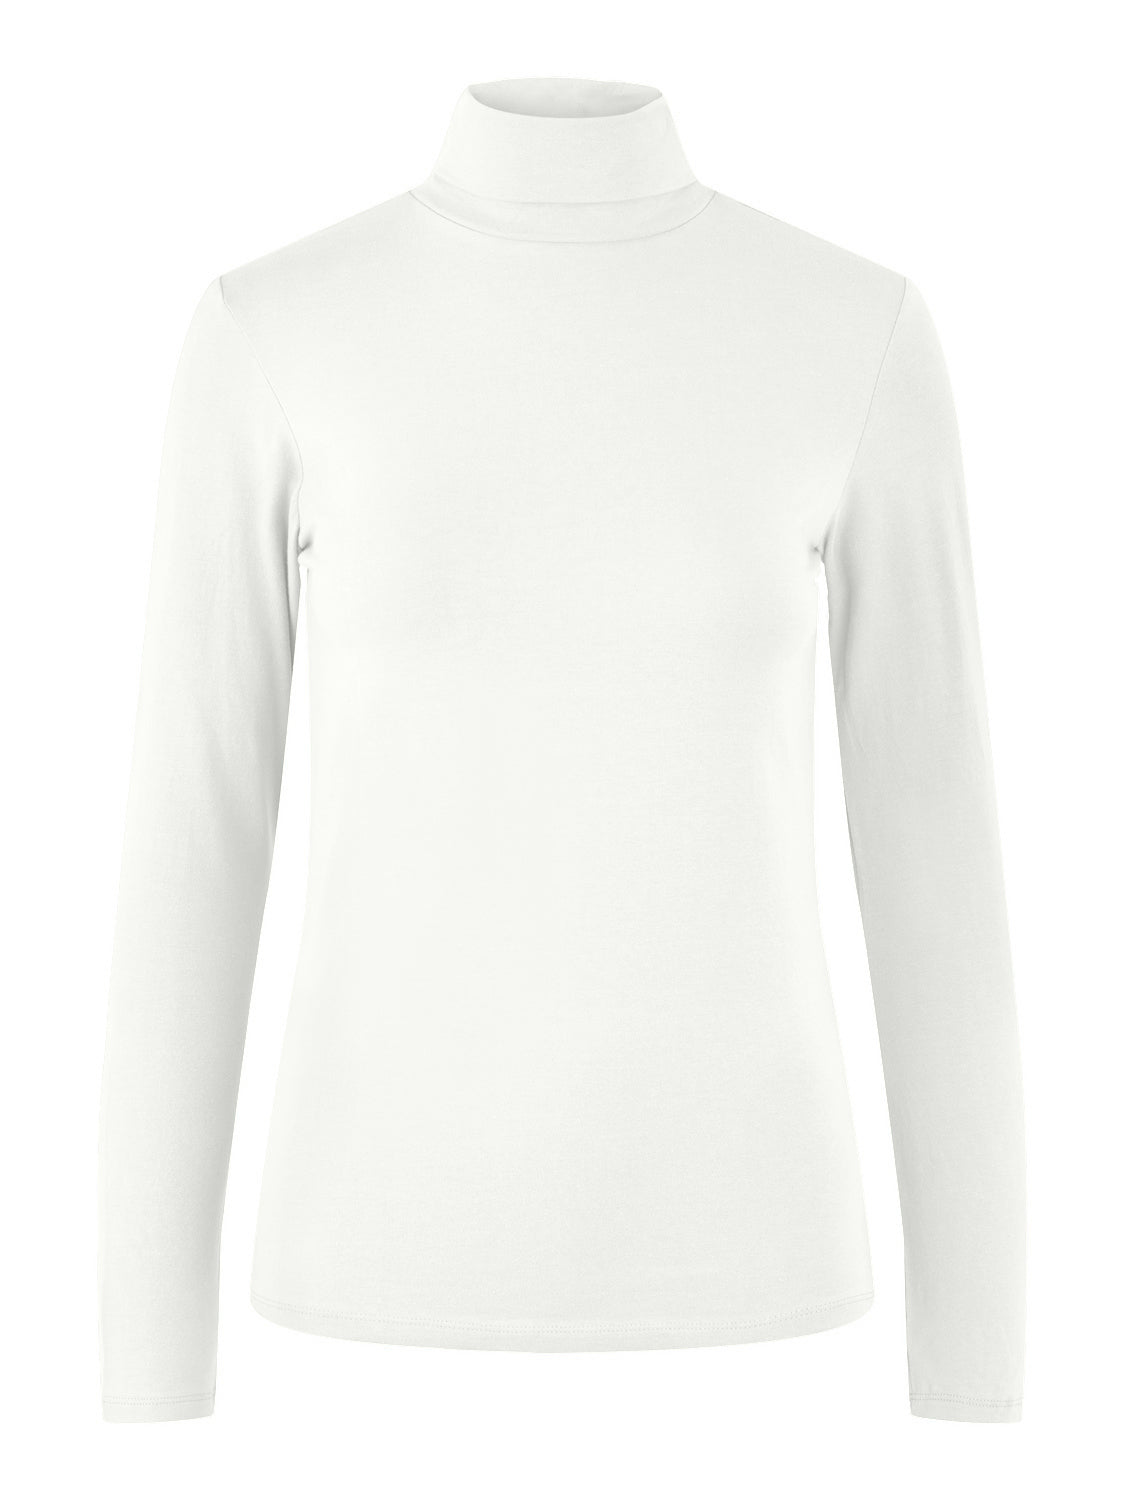 PCSIRENE Pullover - Bright White